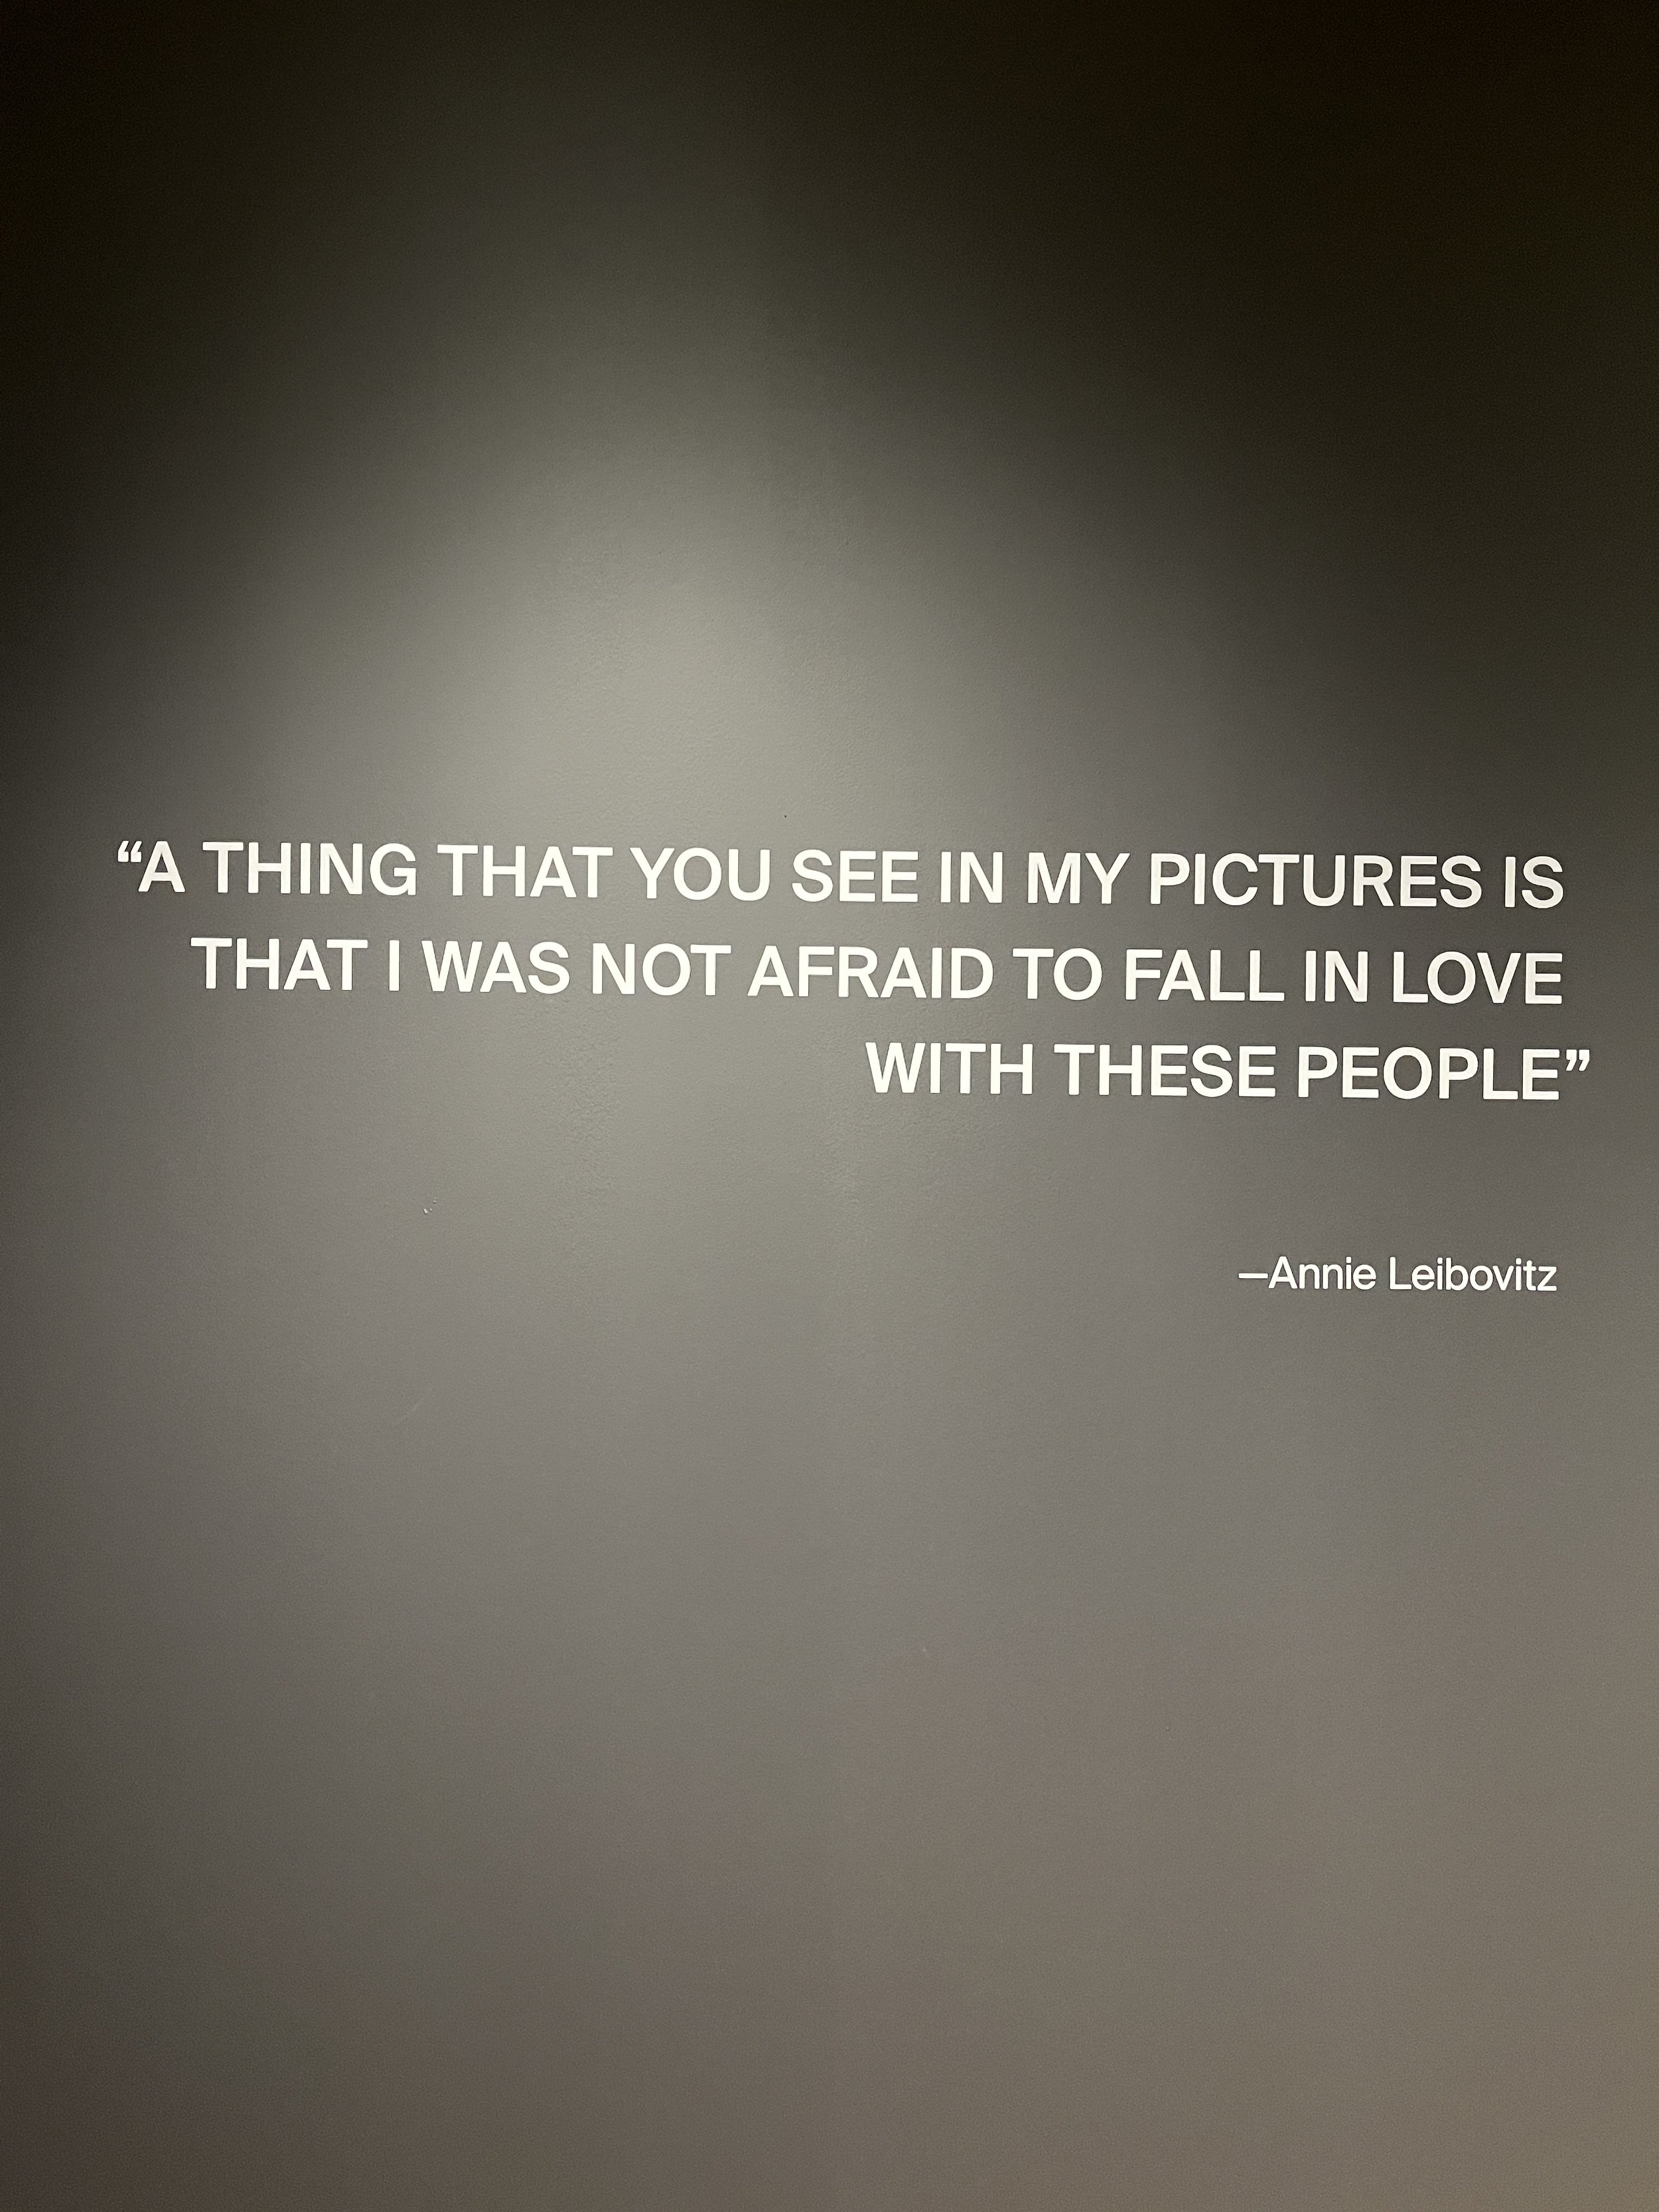 Leibovitz quote